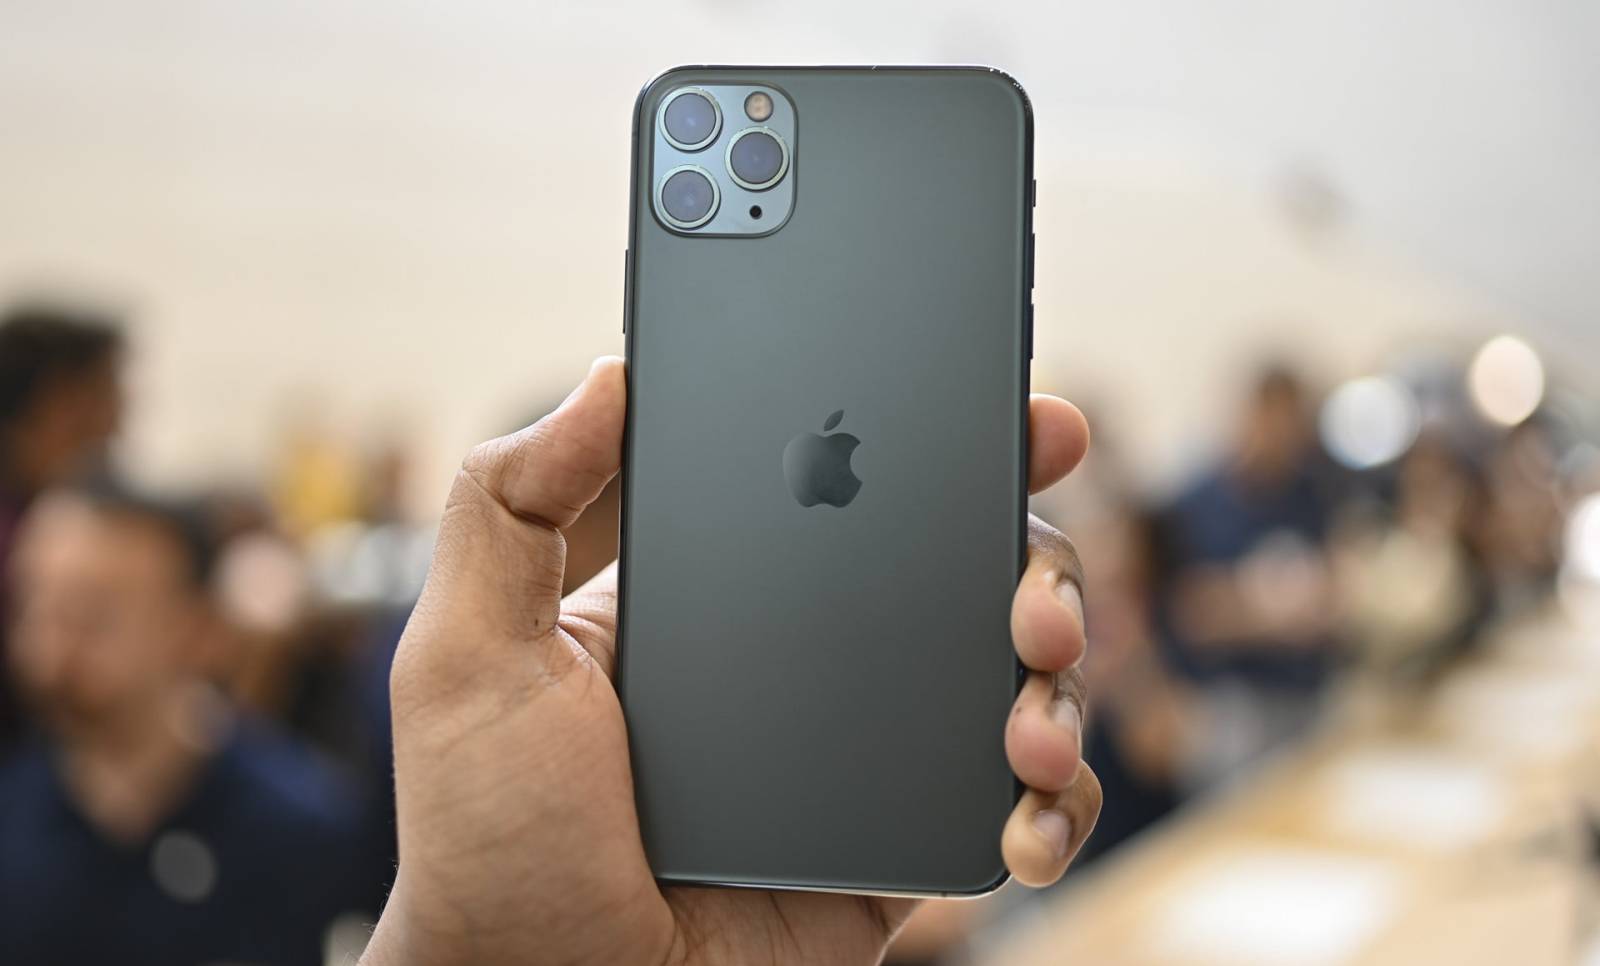 Apple registrerer salg OVER FORVENTNINGER til iPhone 11-serien